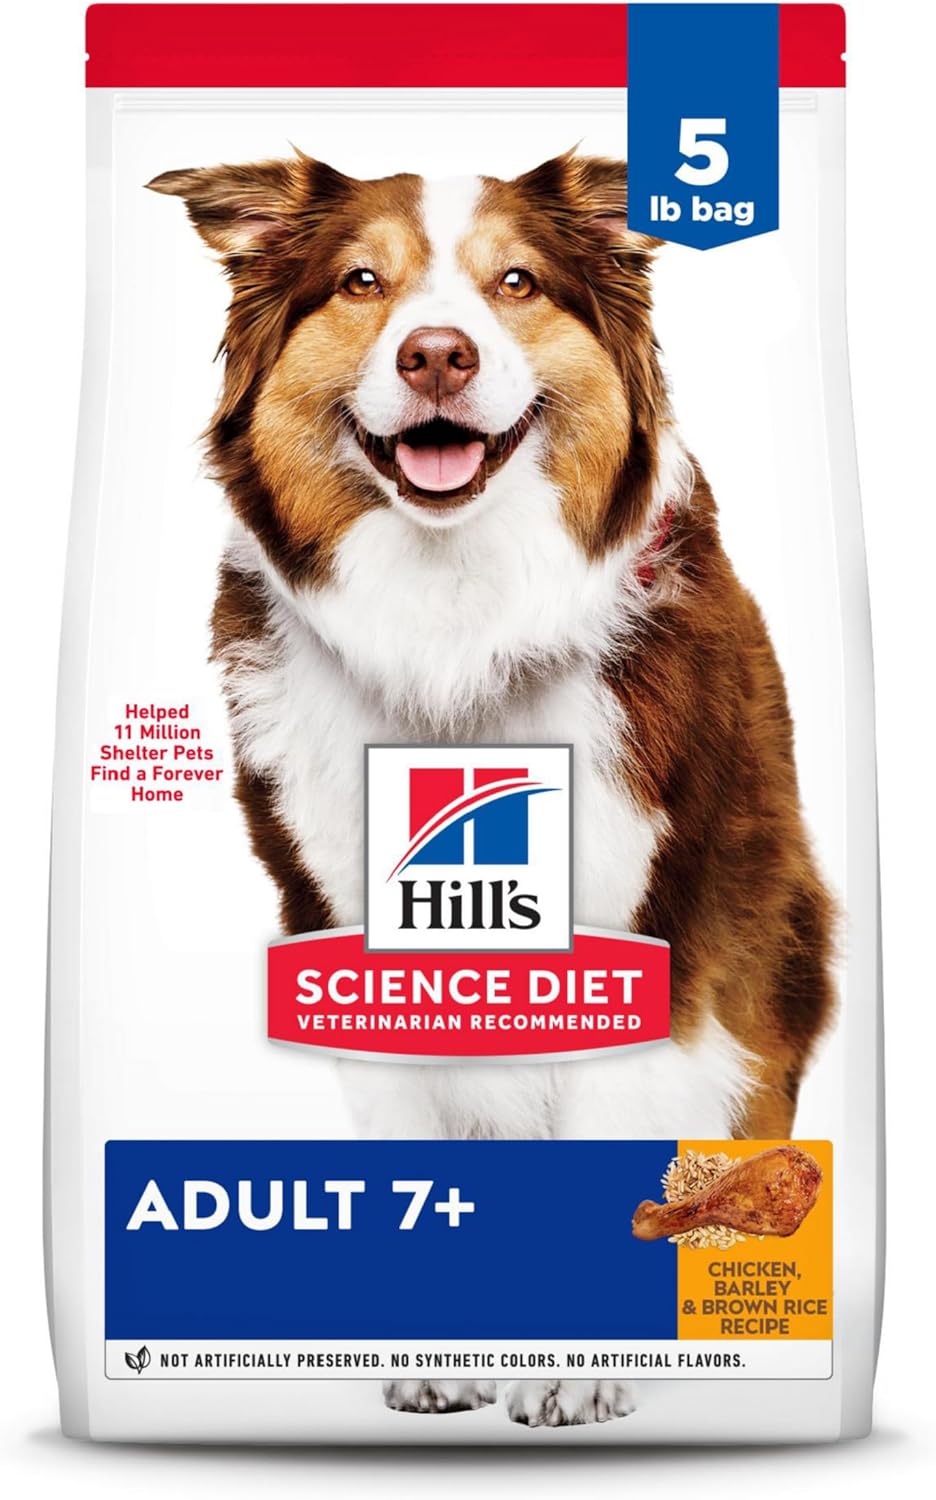 Hill's Science Diet Adult 7+, Senior Adult 7+ Premium Nutrition, Dry Dog Food, Chicken, Brown Rice, & Barley, 5 lb Bag